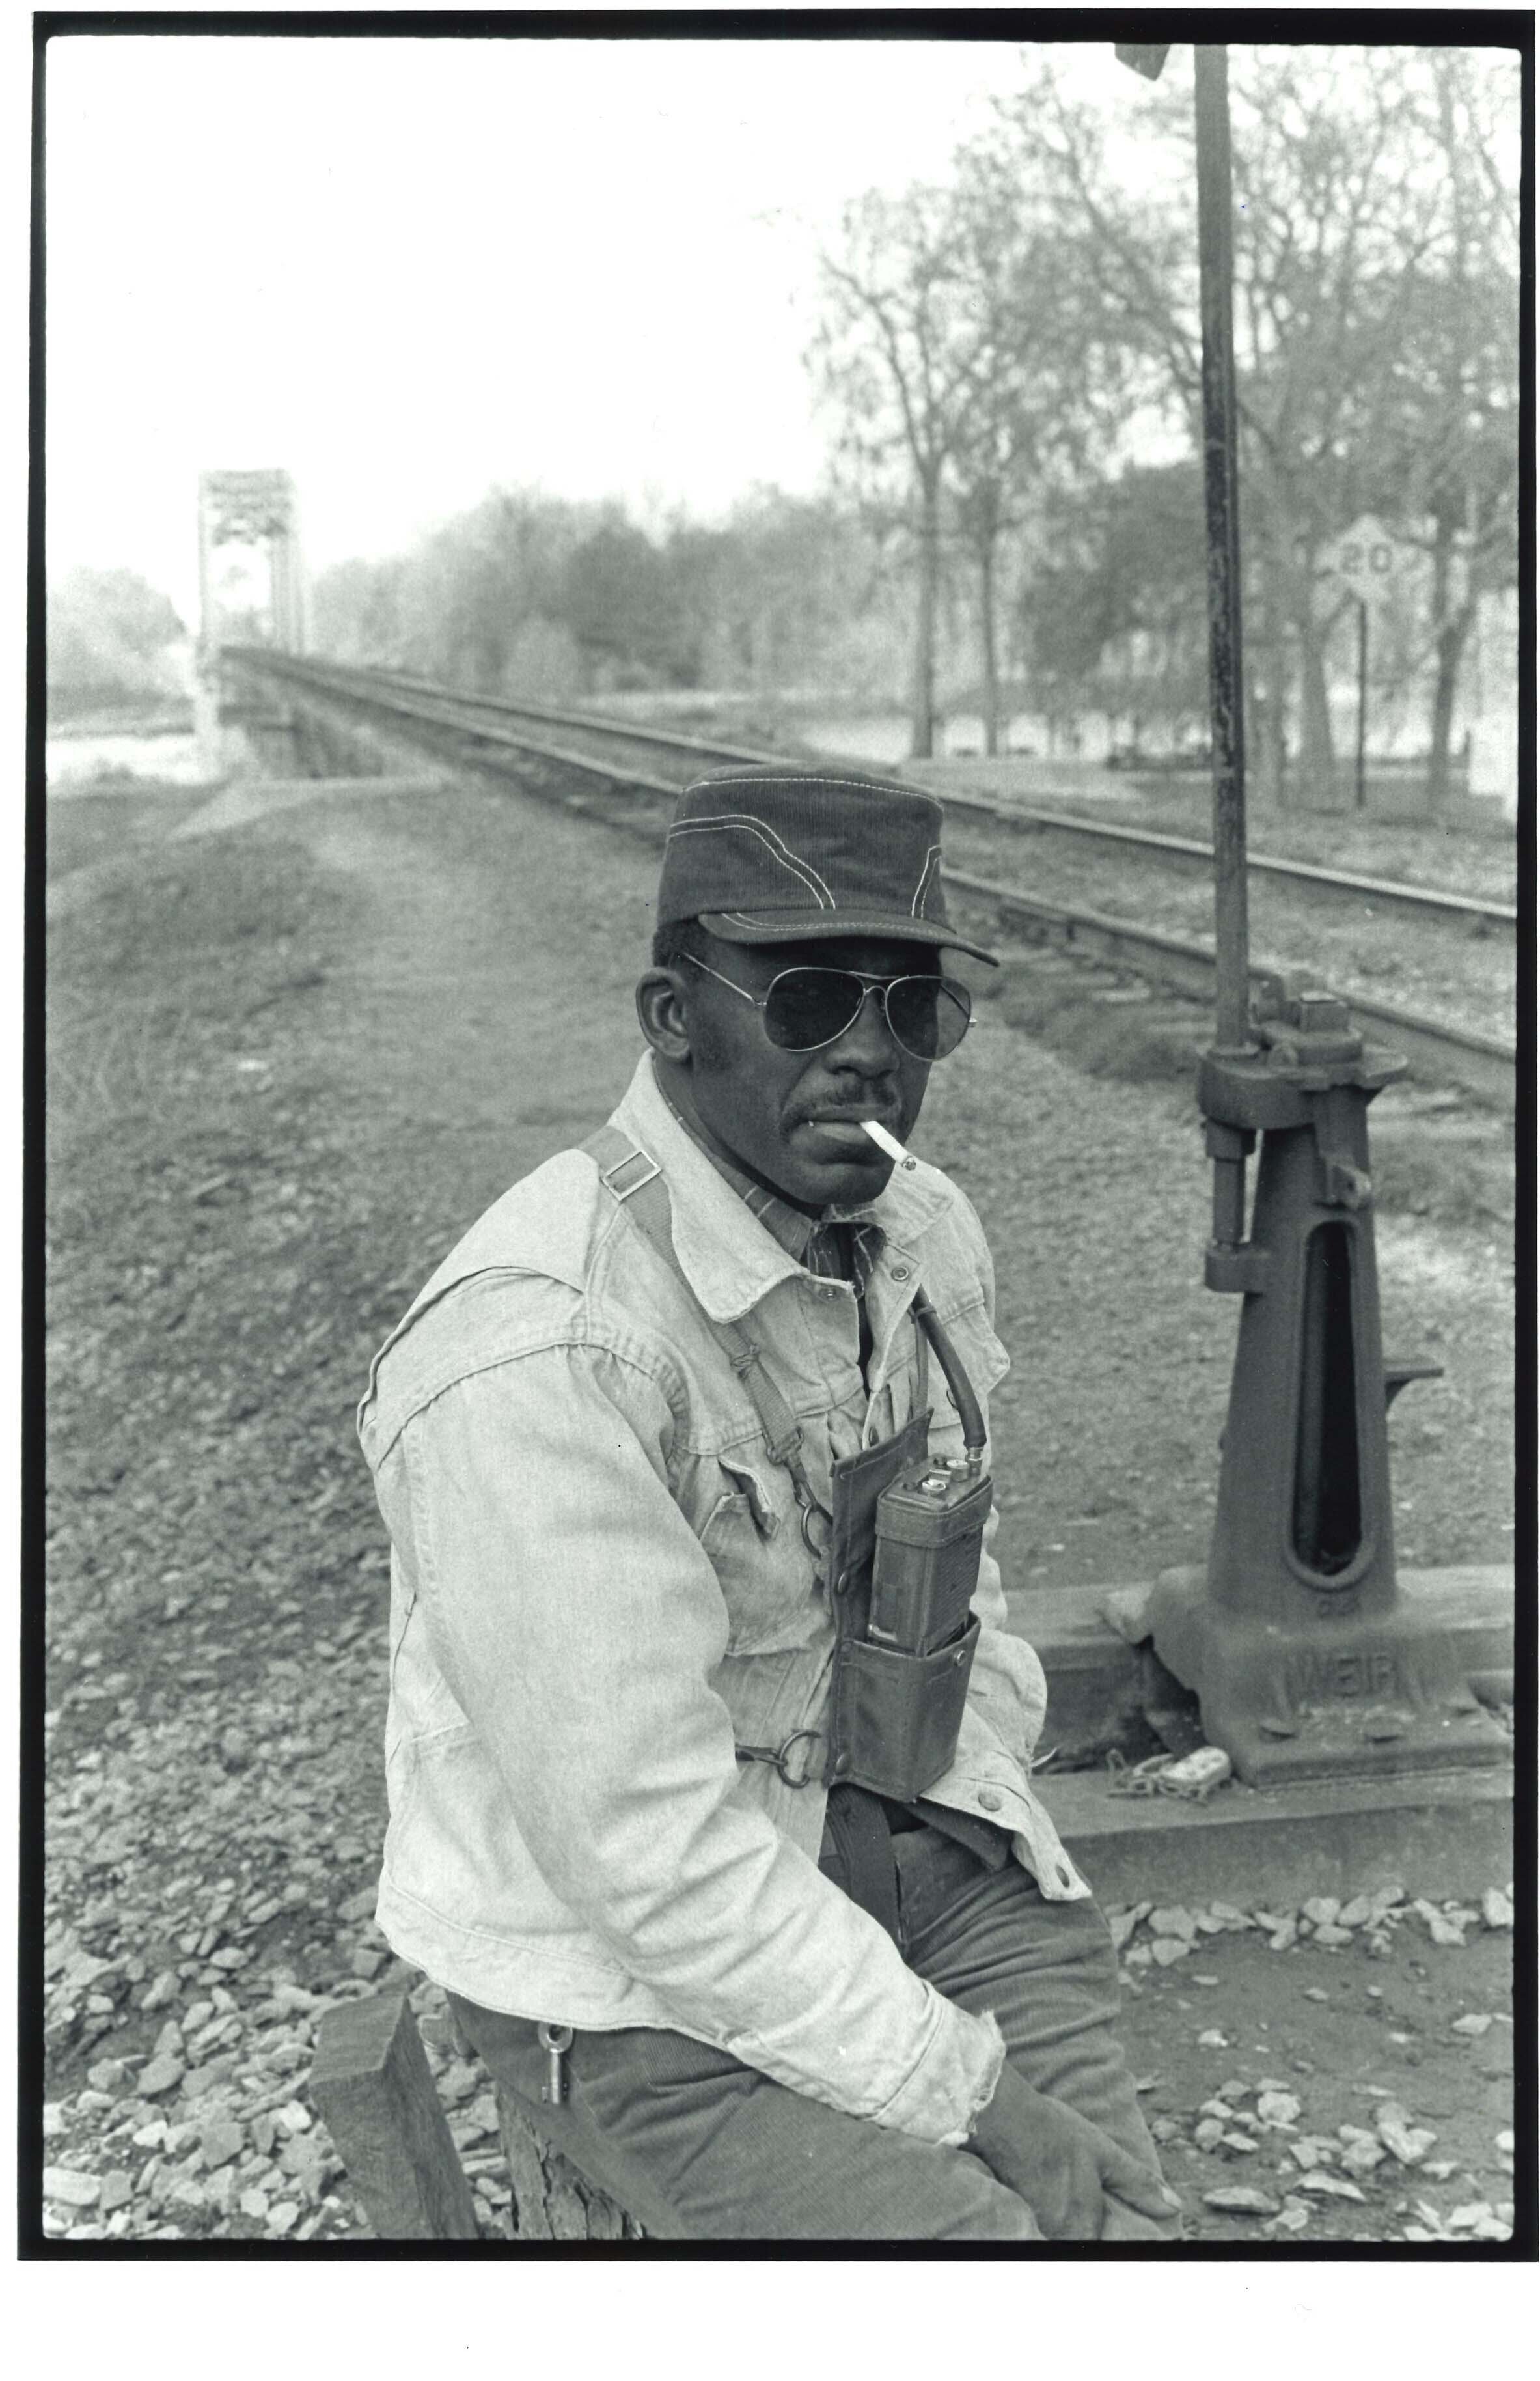   Switchman, Seaboard Coast Line Railroad, Bainbridge, GA  Image: 1981/printed: 2020 Gelatin silver print 11 1/2 x 7 3/4 in. (image size)  The Do Good Fund, Inc., 2020-080  